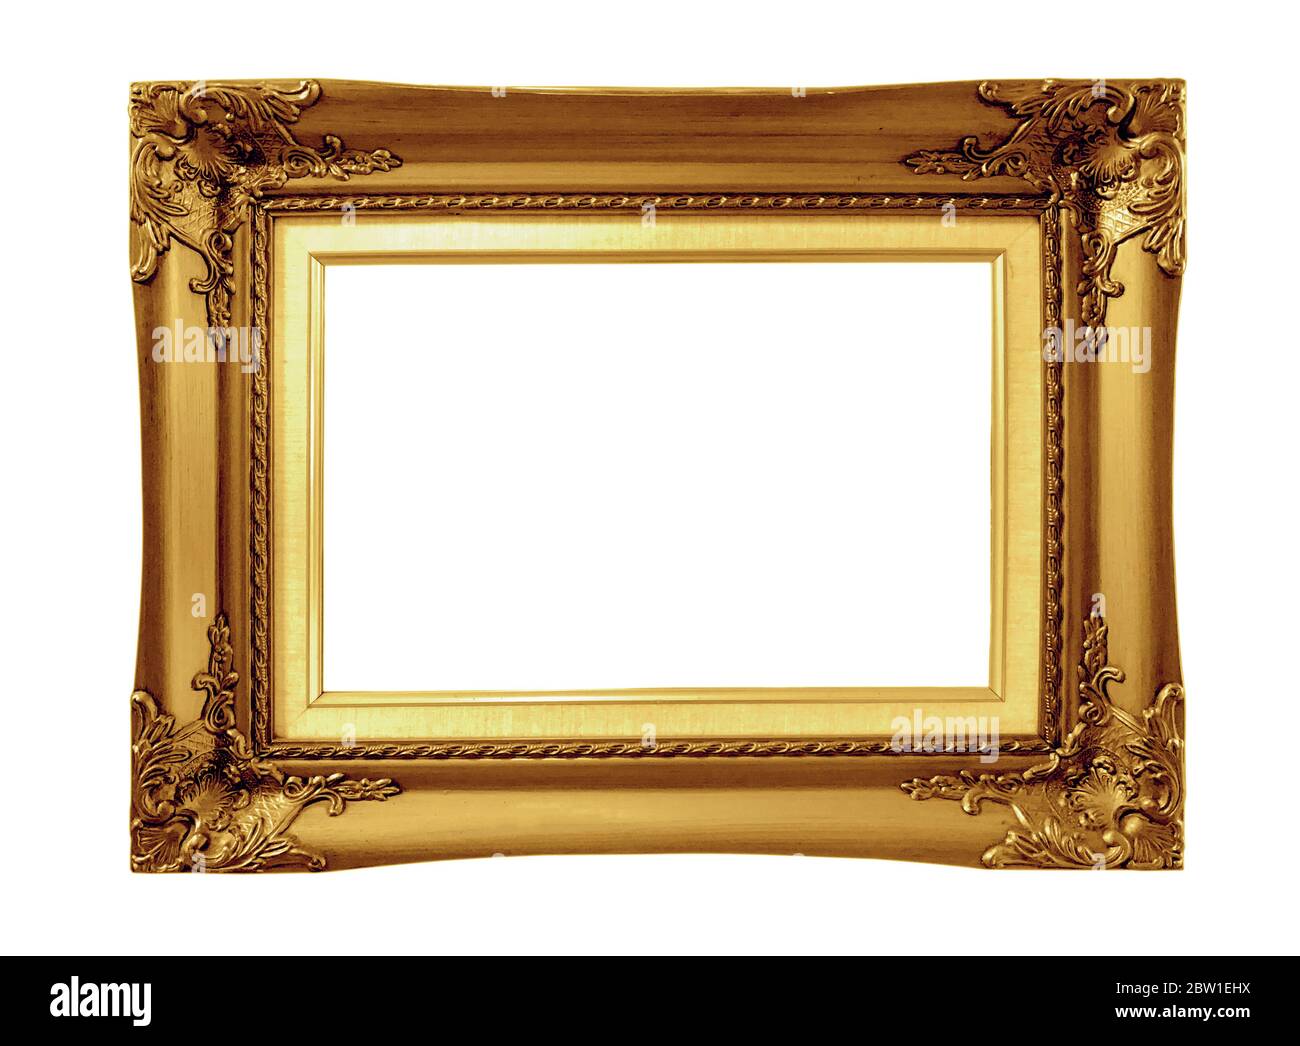 Golden Frame isolated on white background. Stock Photo